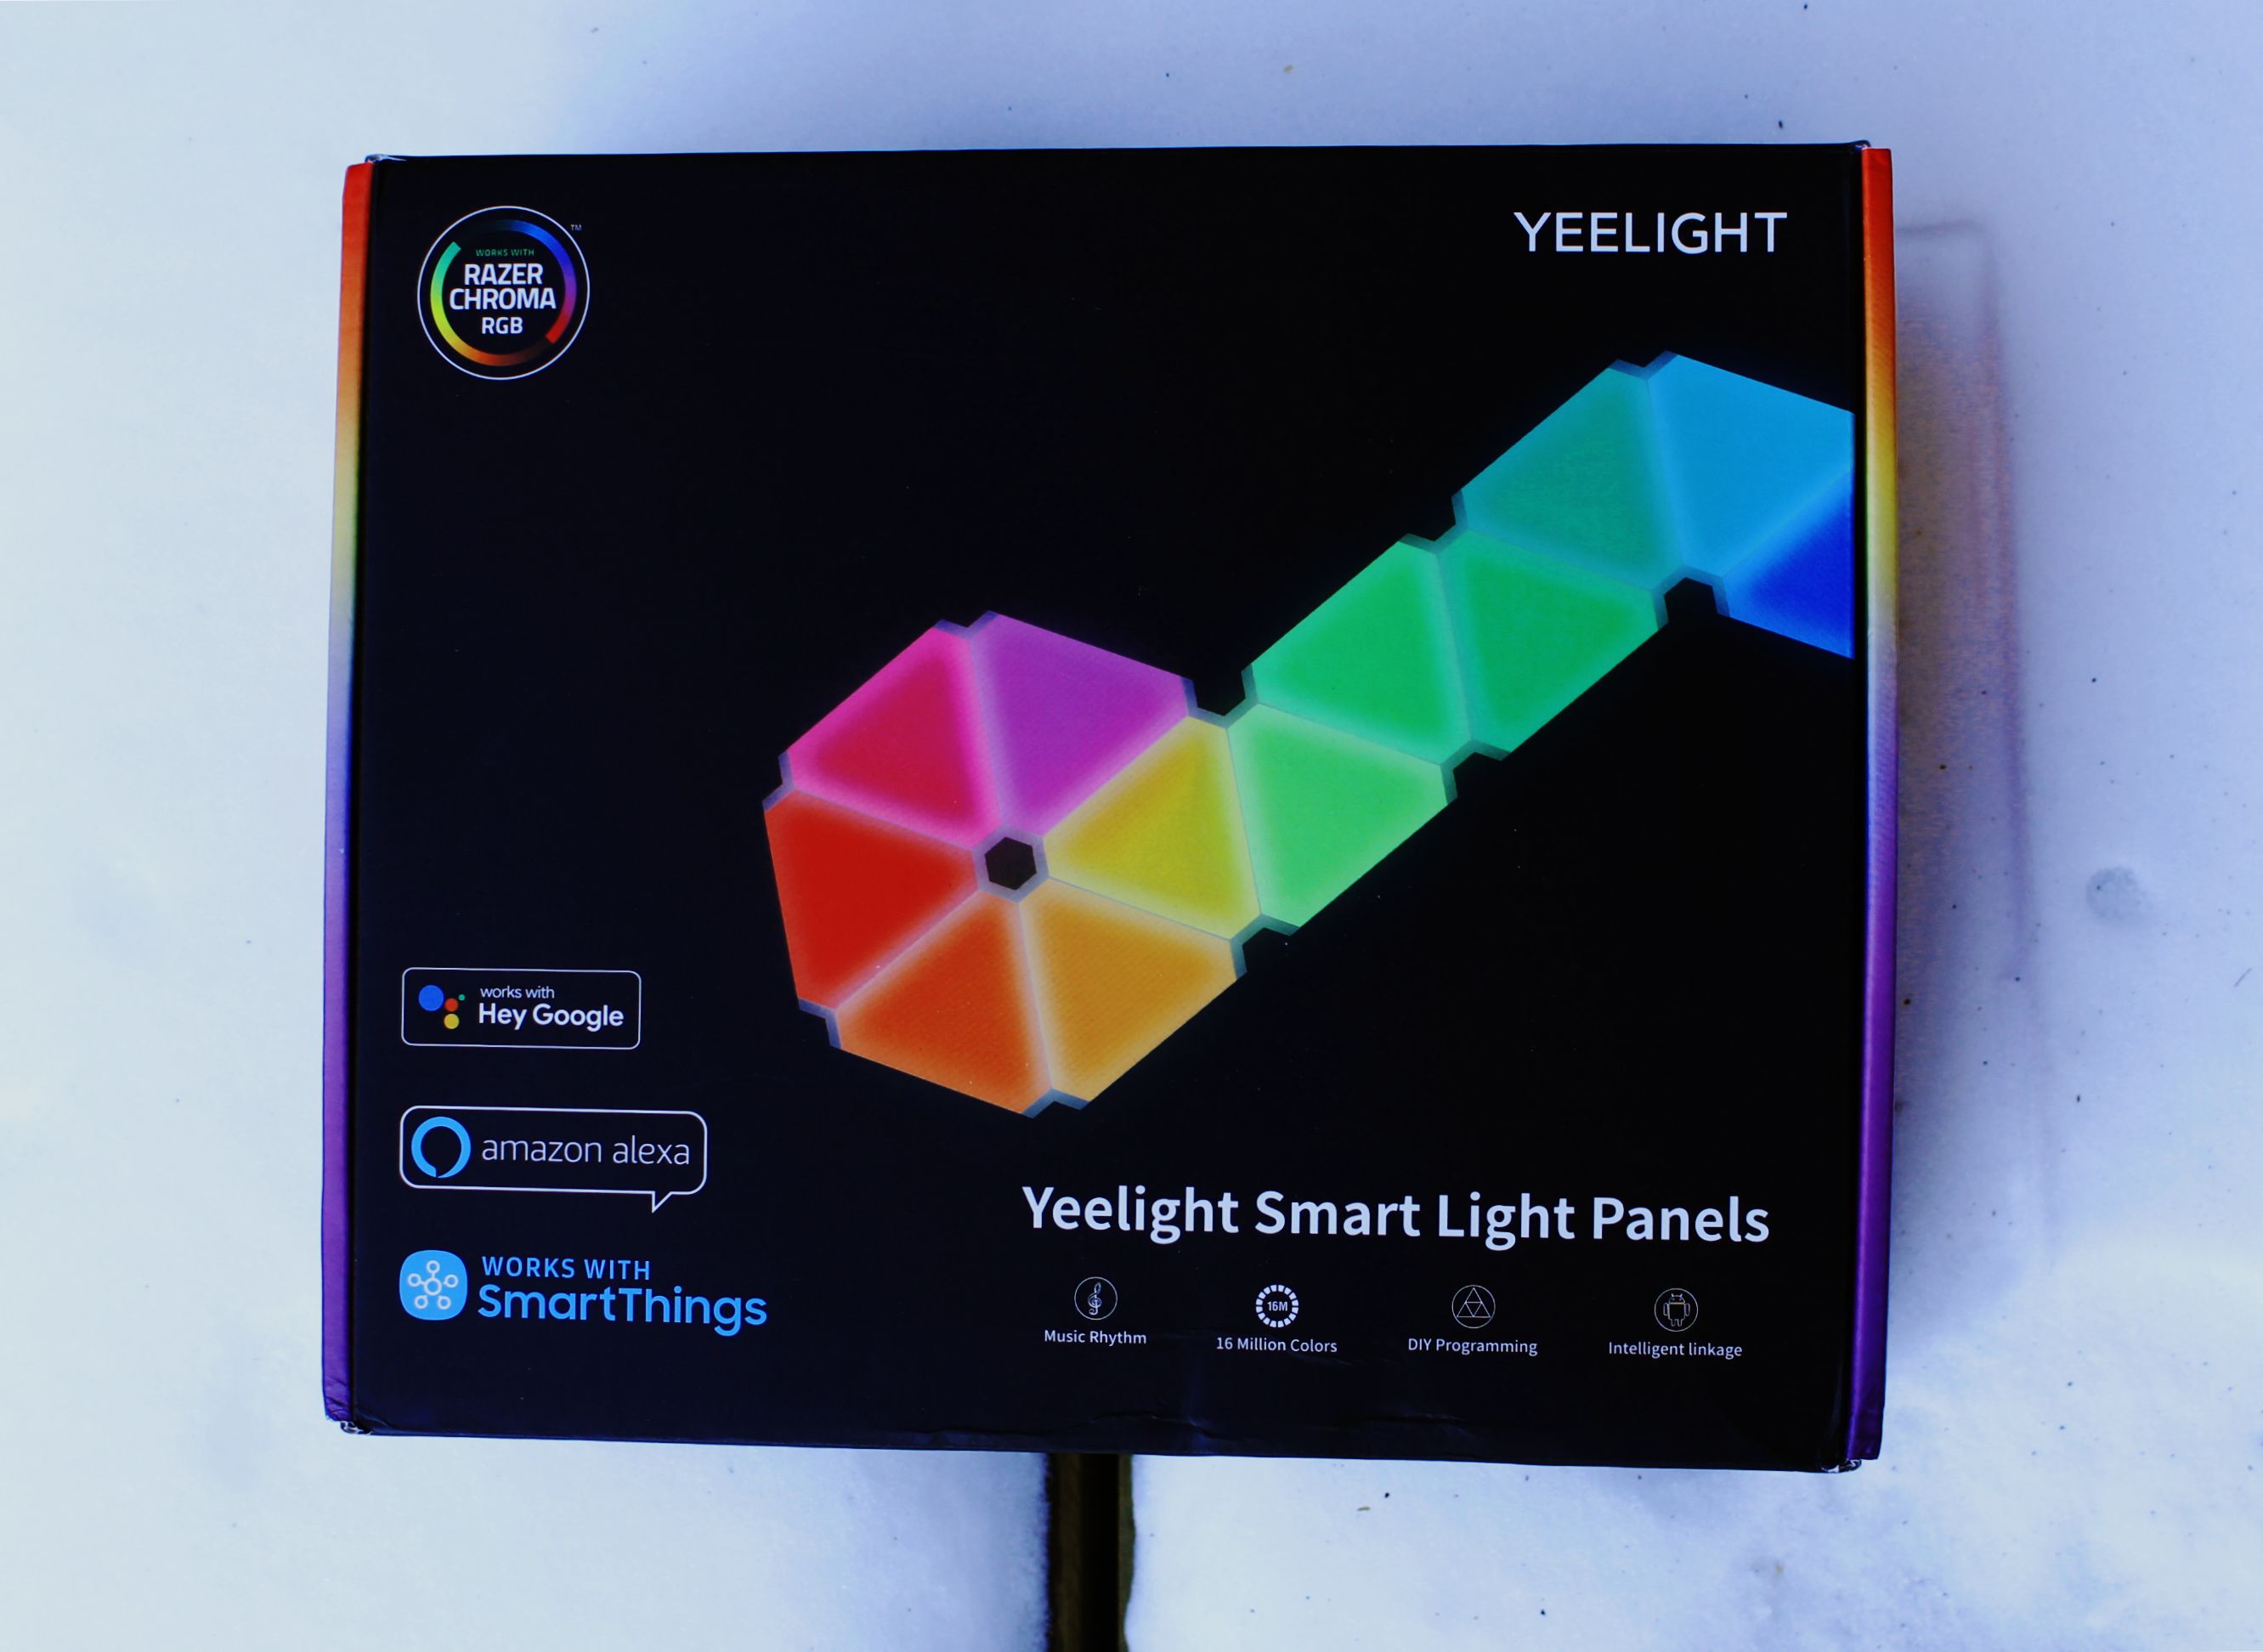 yeelight-smart-light-panels-box